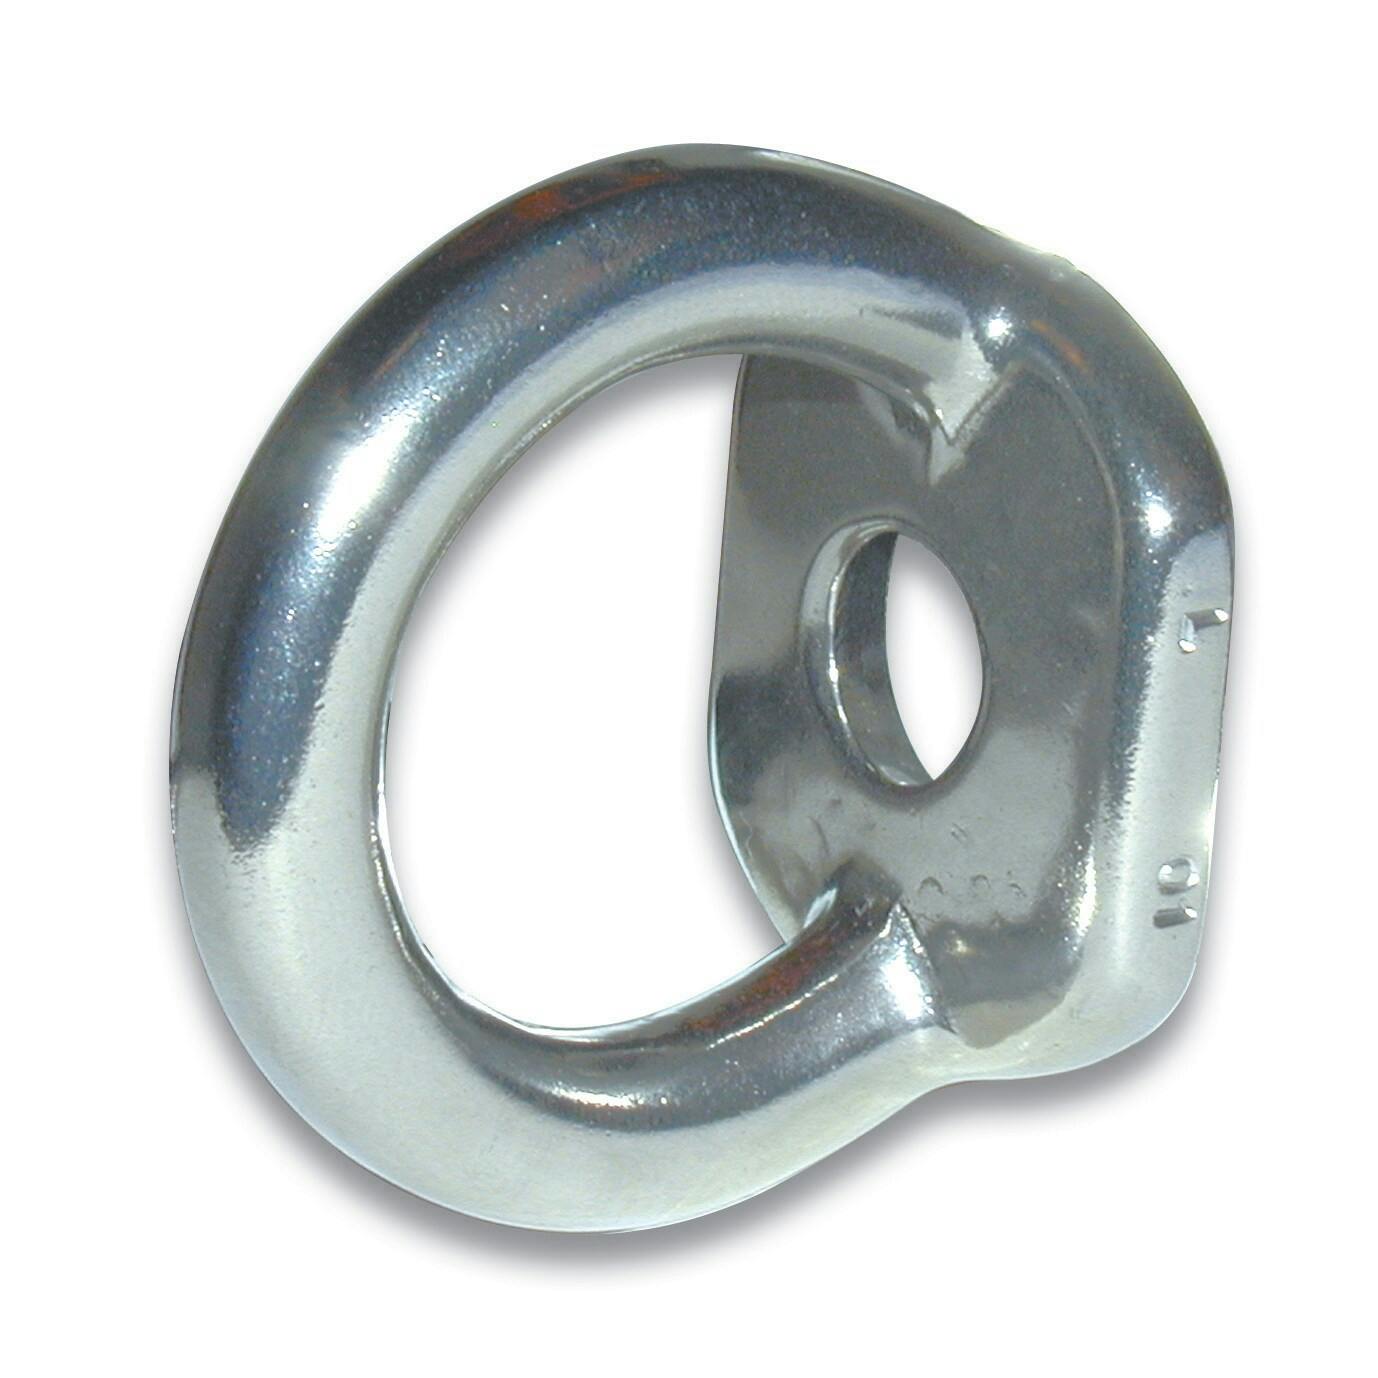 3M™ PROTECTA® Fixed Anchor D-ring AM211, 1 EA/Case